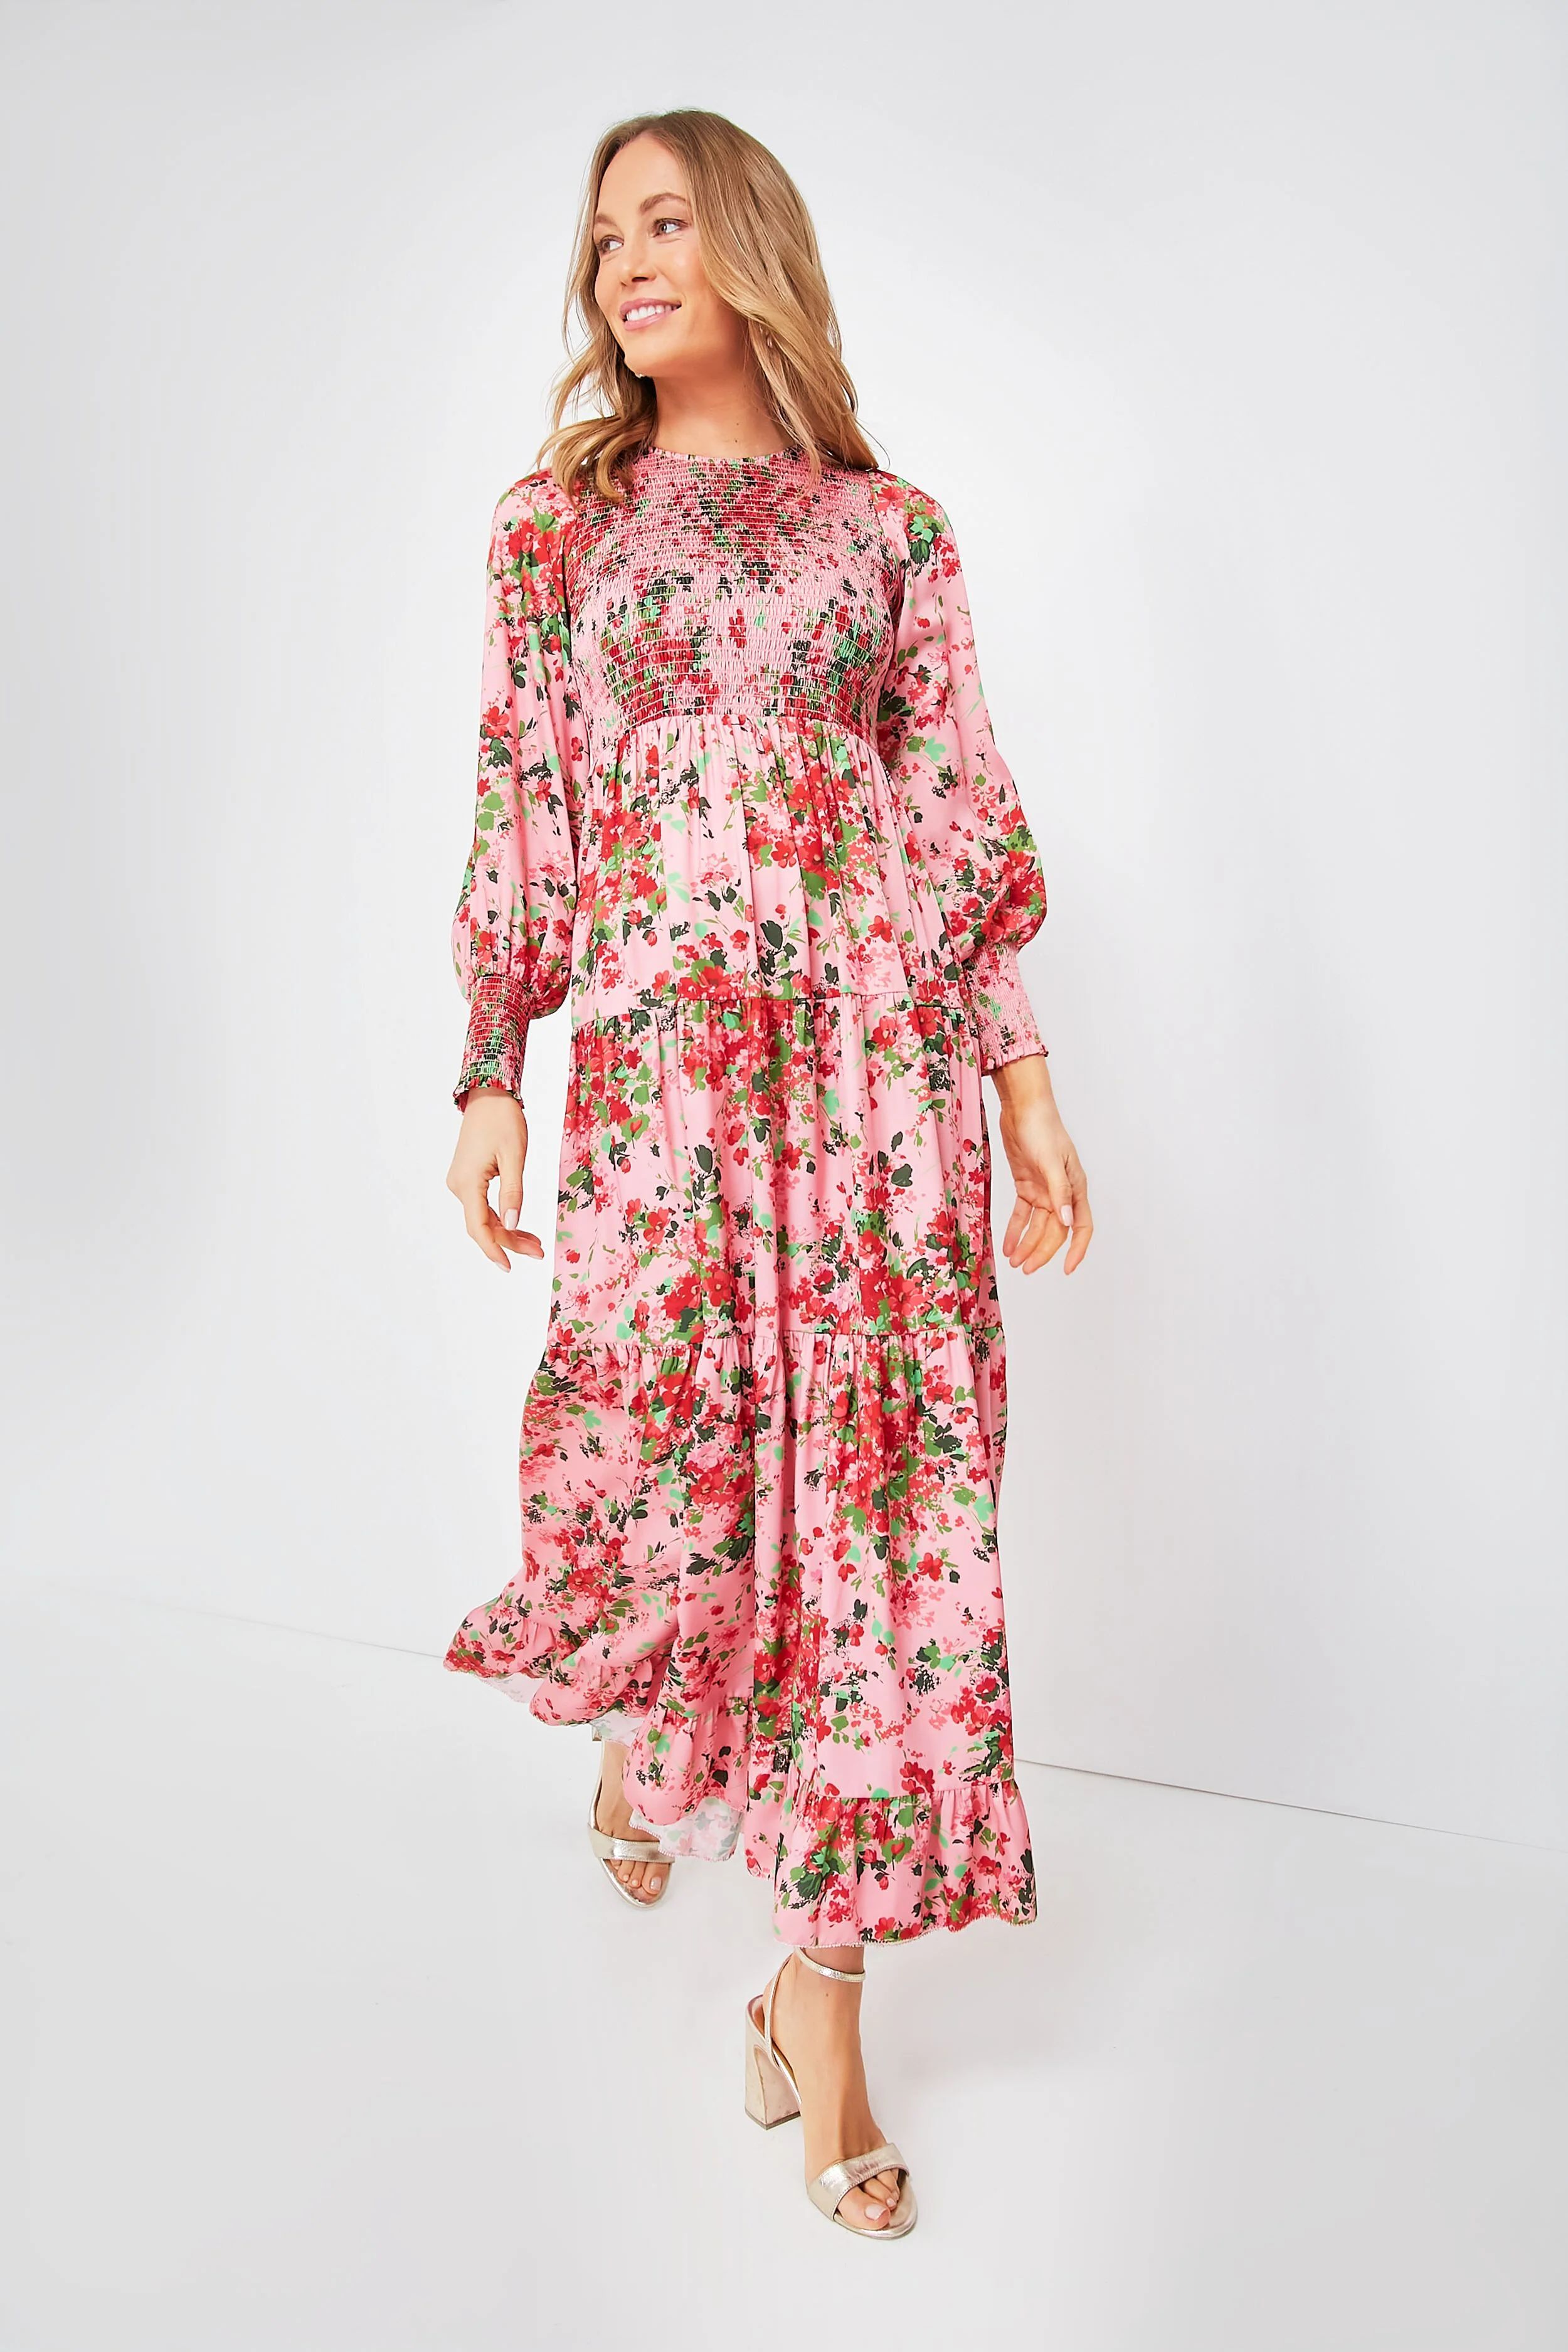 Peony Meadows Libby Dress | Tuckernuck (US)